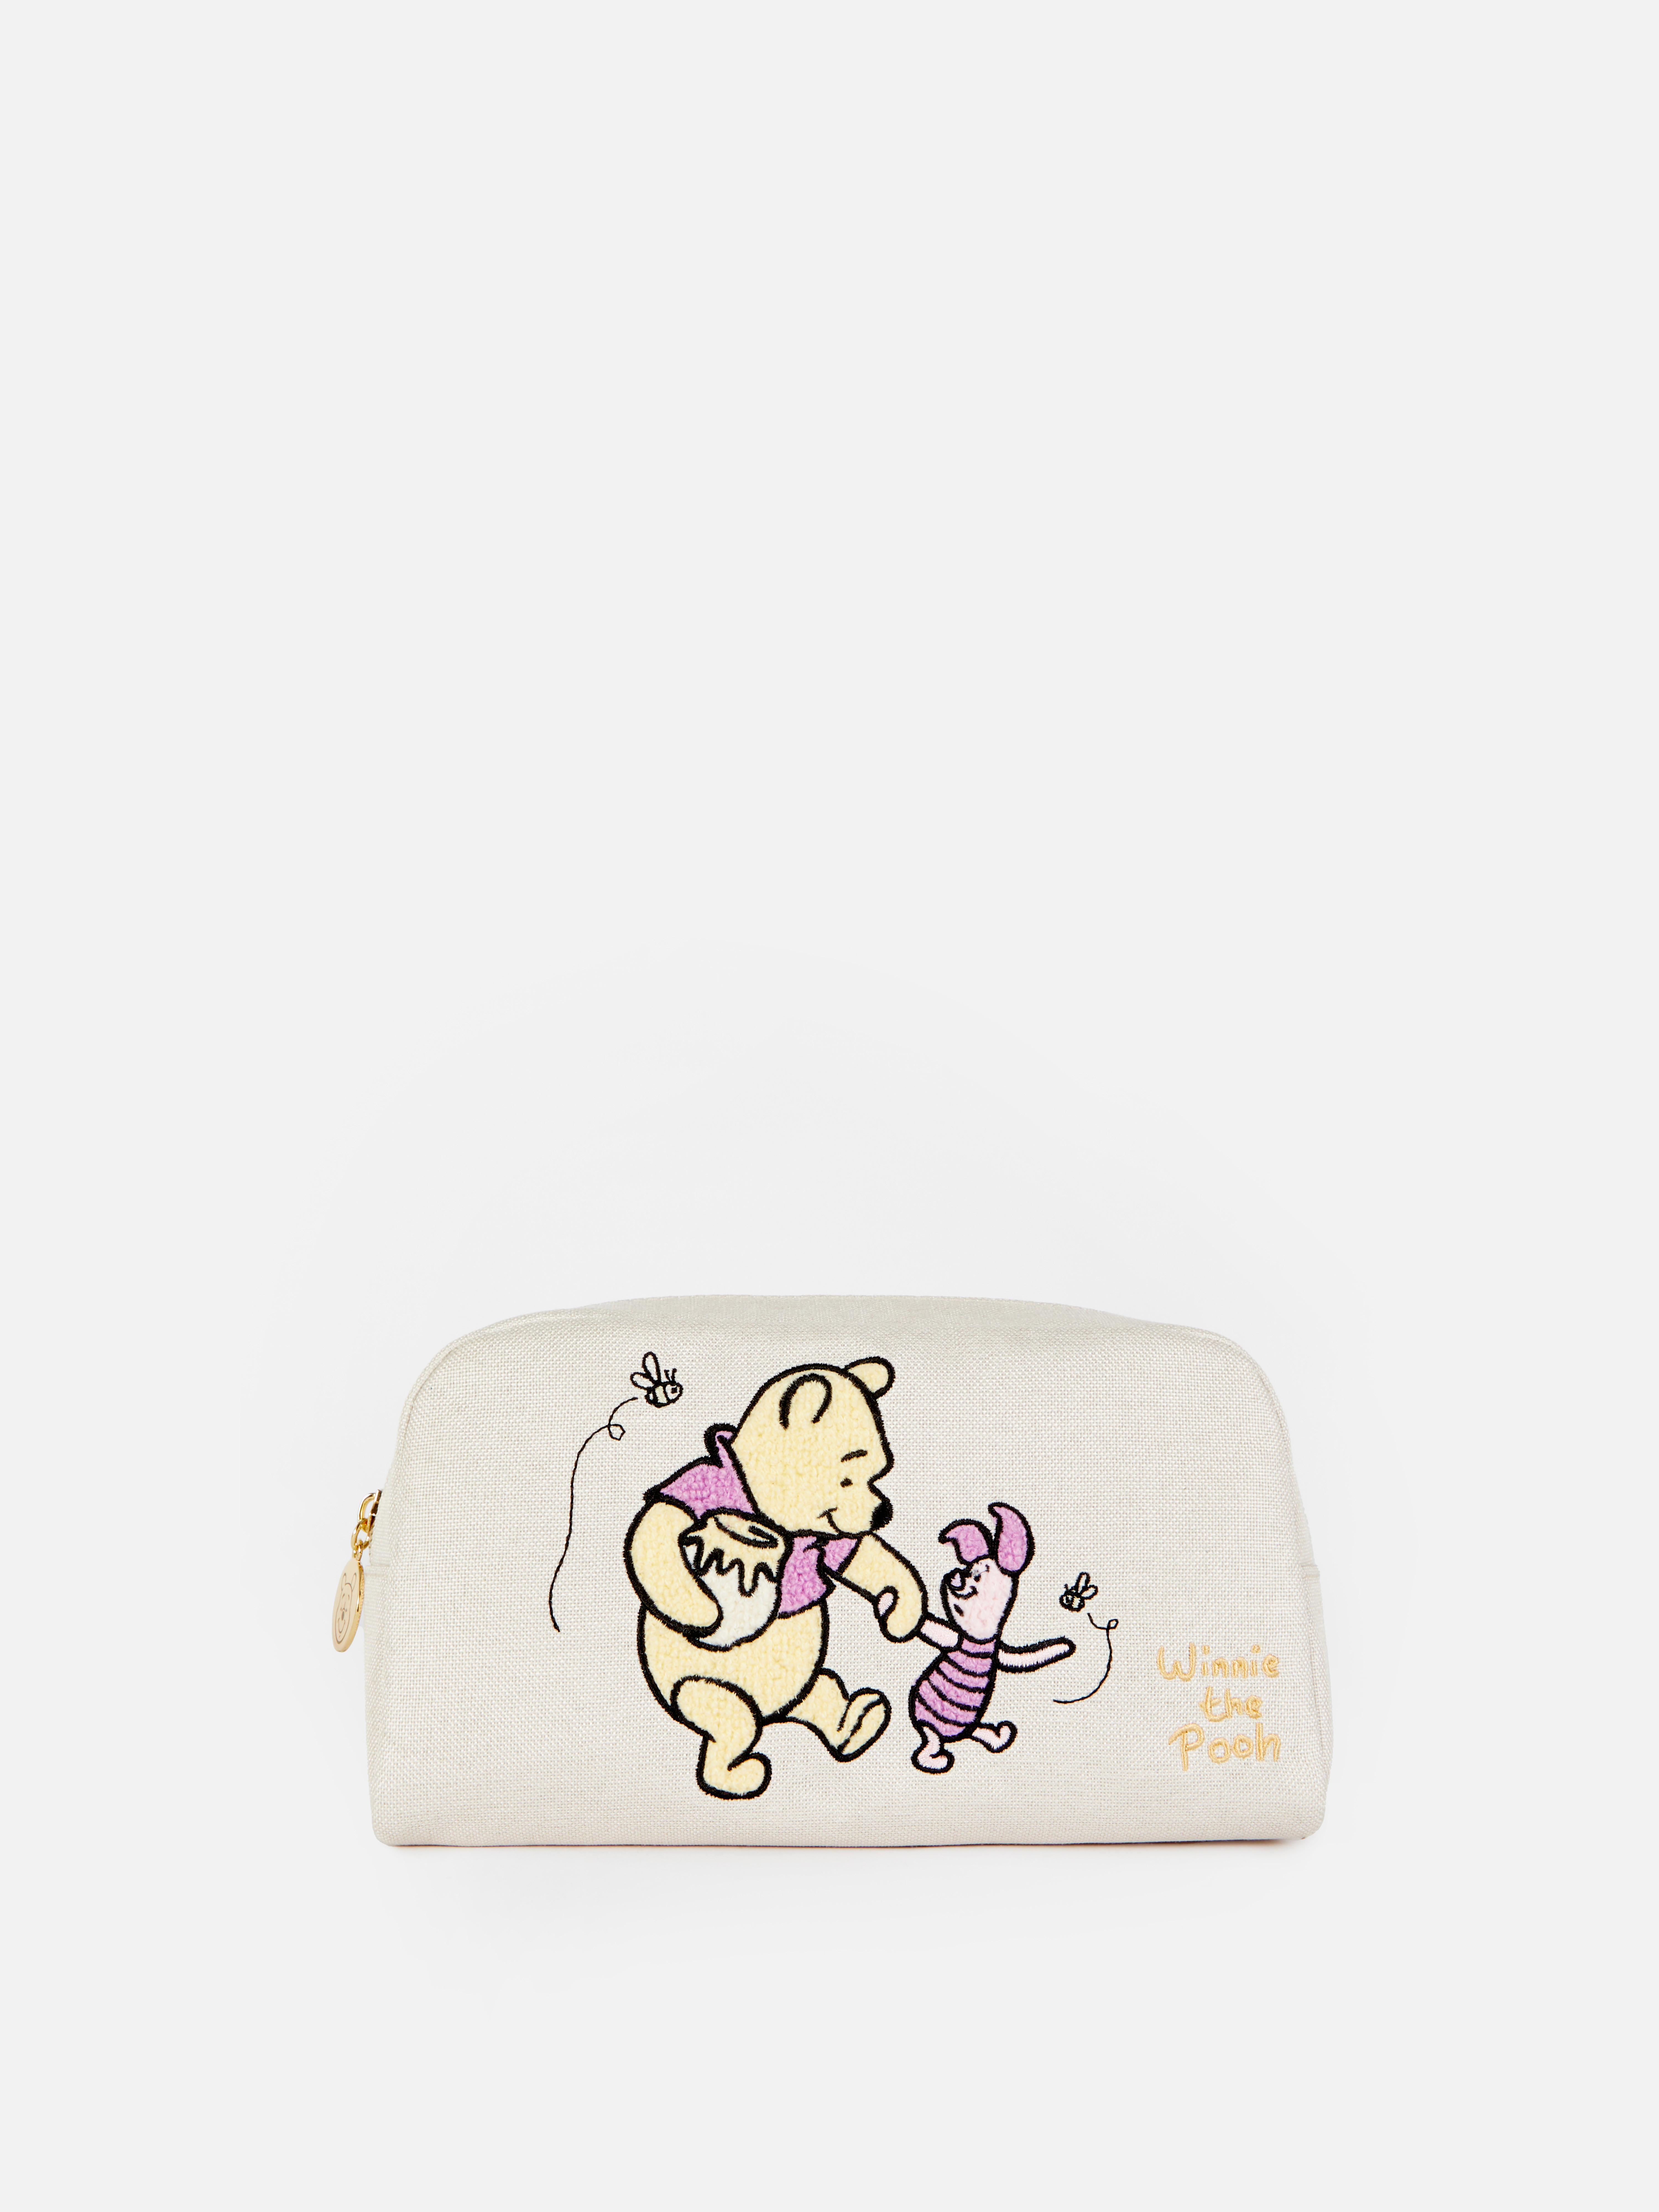 Bolsa de maquillaje de Winnie the Pooh de Disney